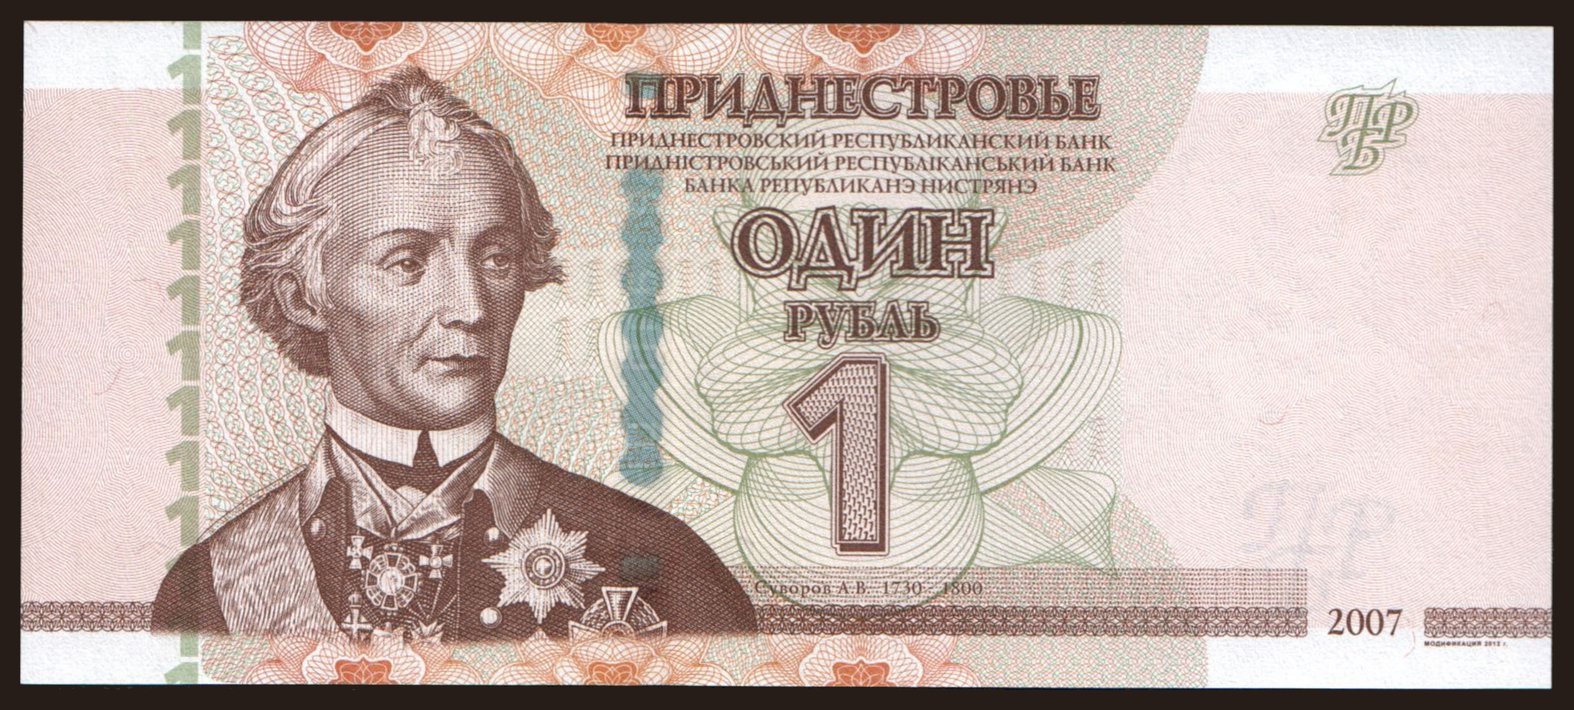 1 ruble, 2007